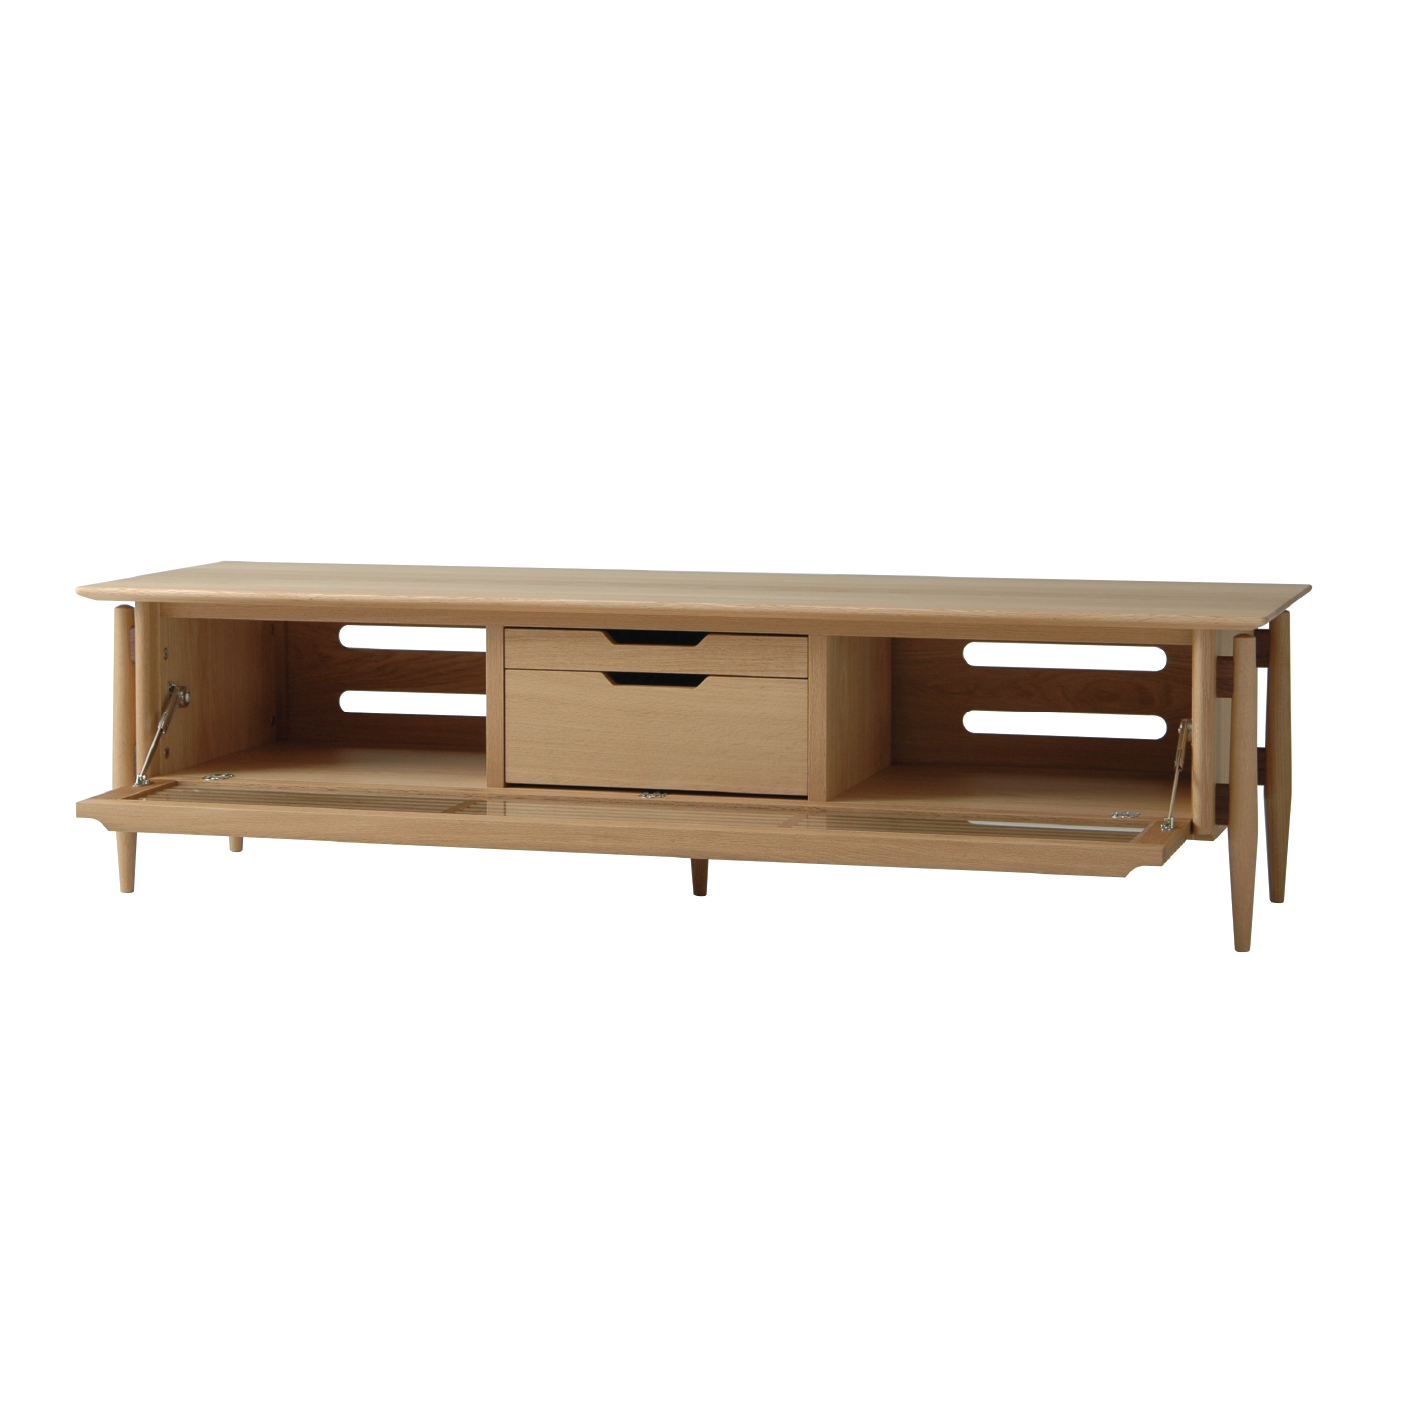 Nissin - White Wood TV Cabinet